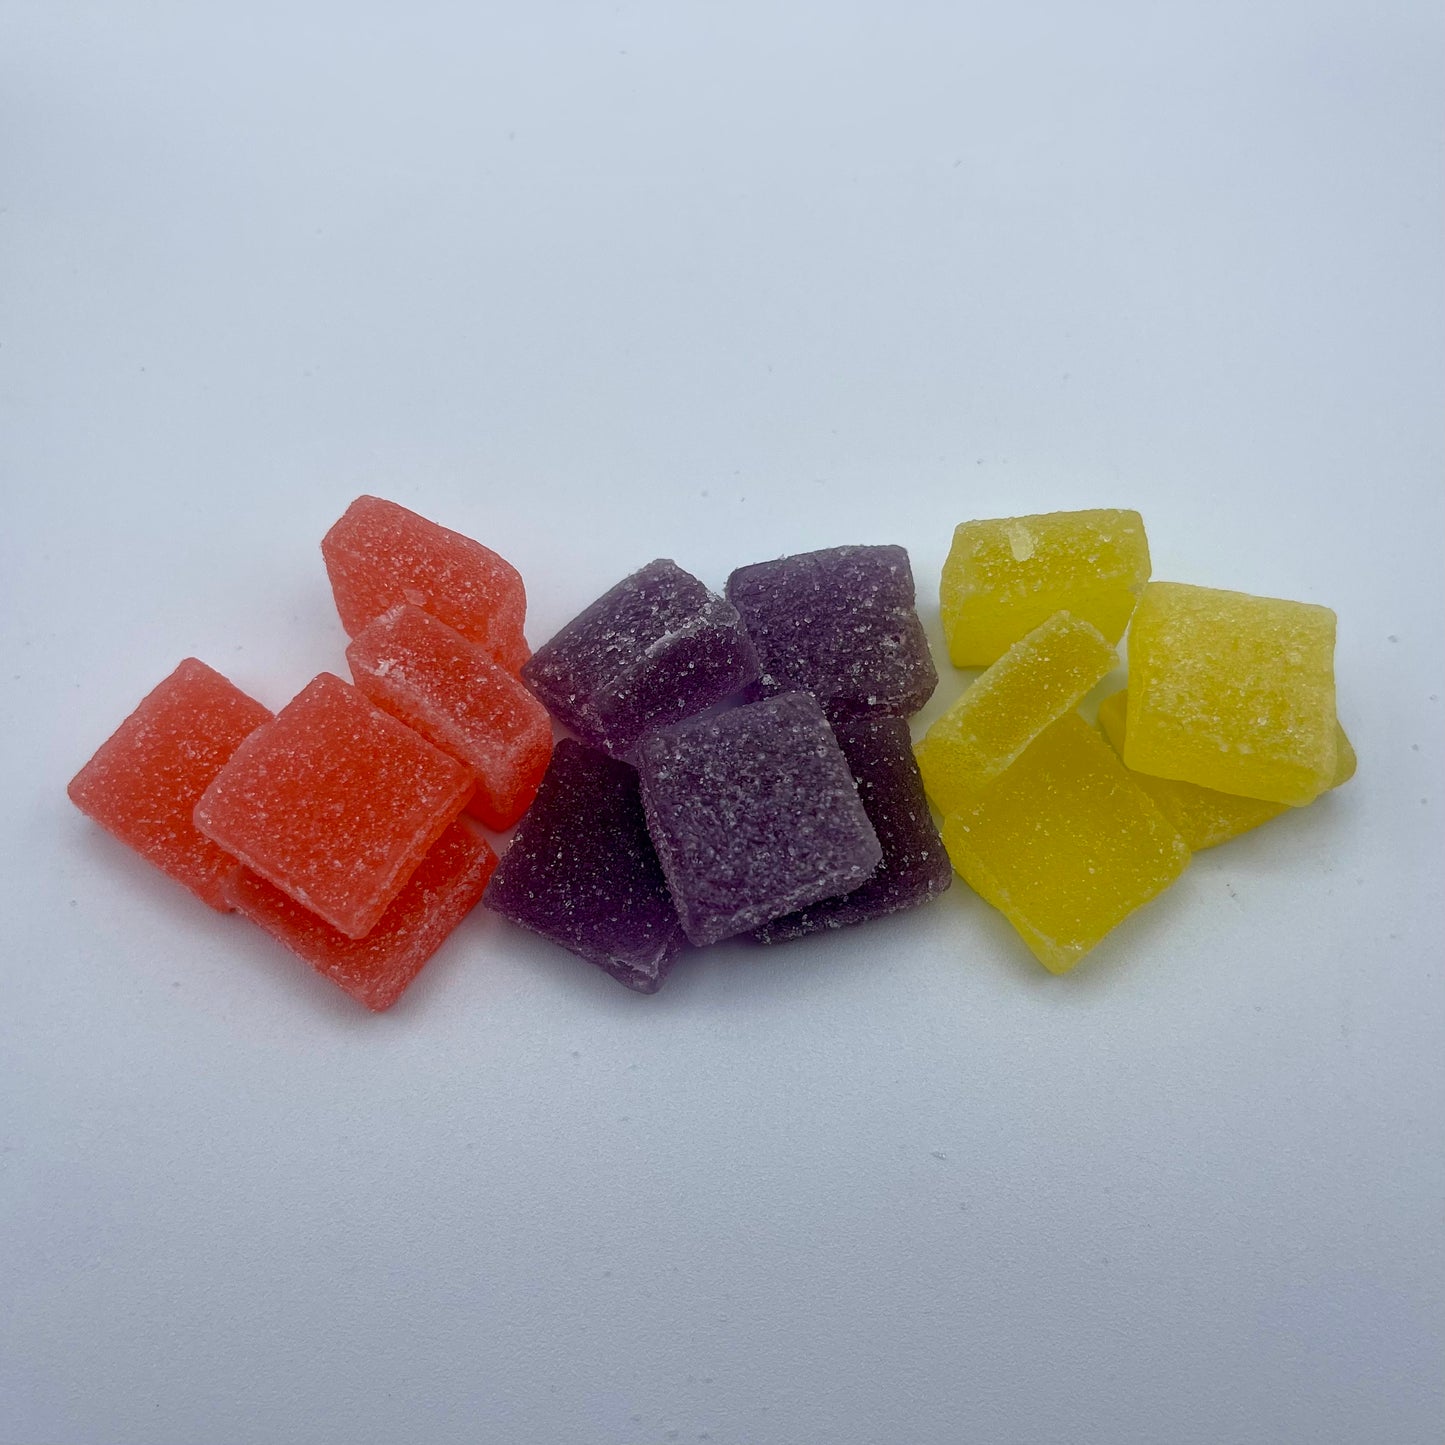 THC + CBD 300mg - Gummies 30 Pack of Trifecta Edibles - 3 Flavor Pack